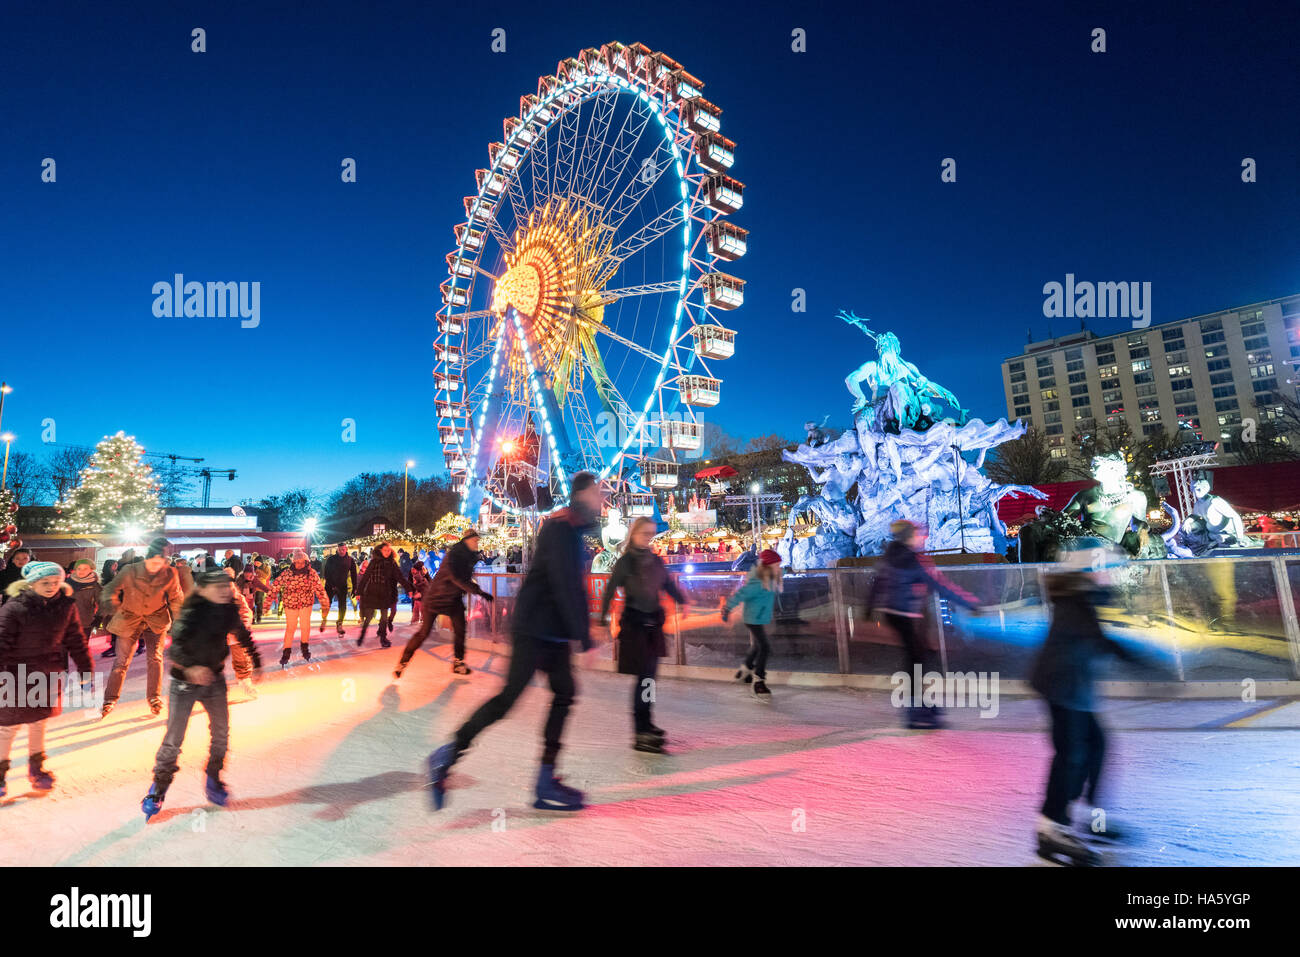 Alexanderplatz christmas market hi-res stock photography and images - Alamy